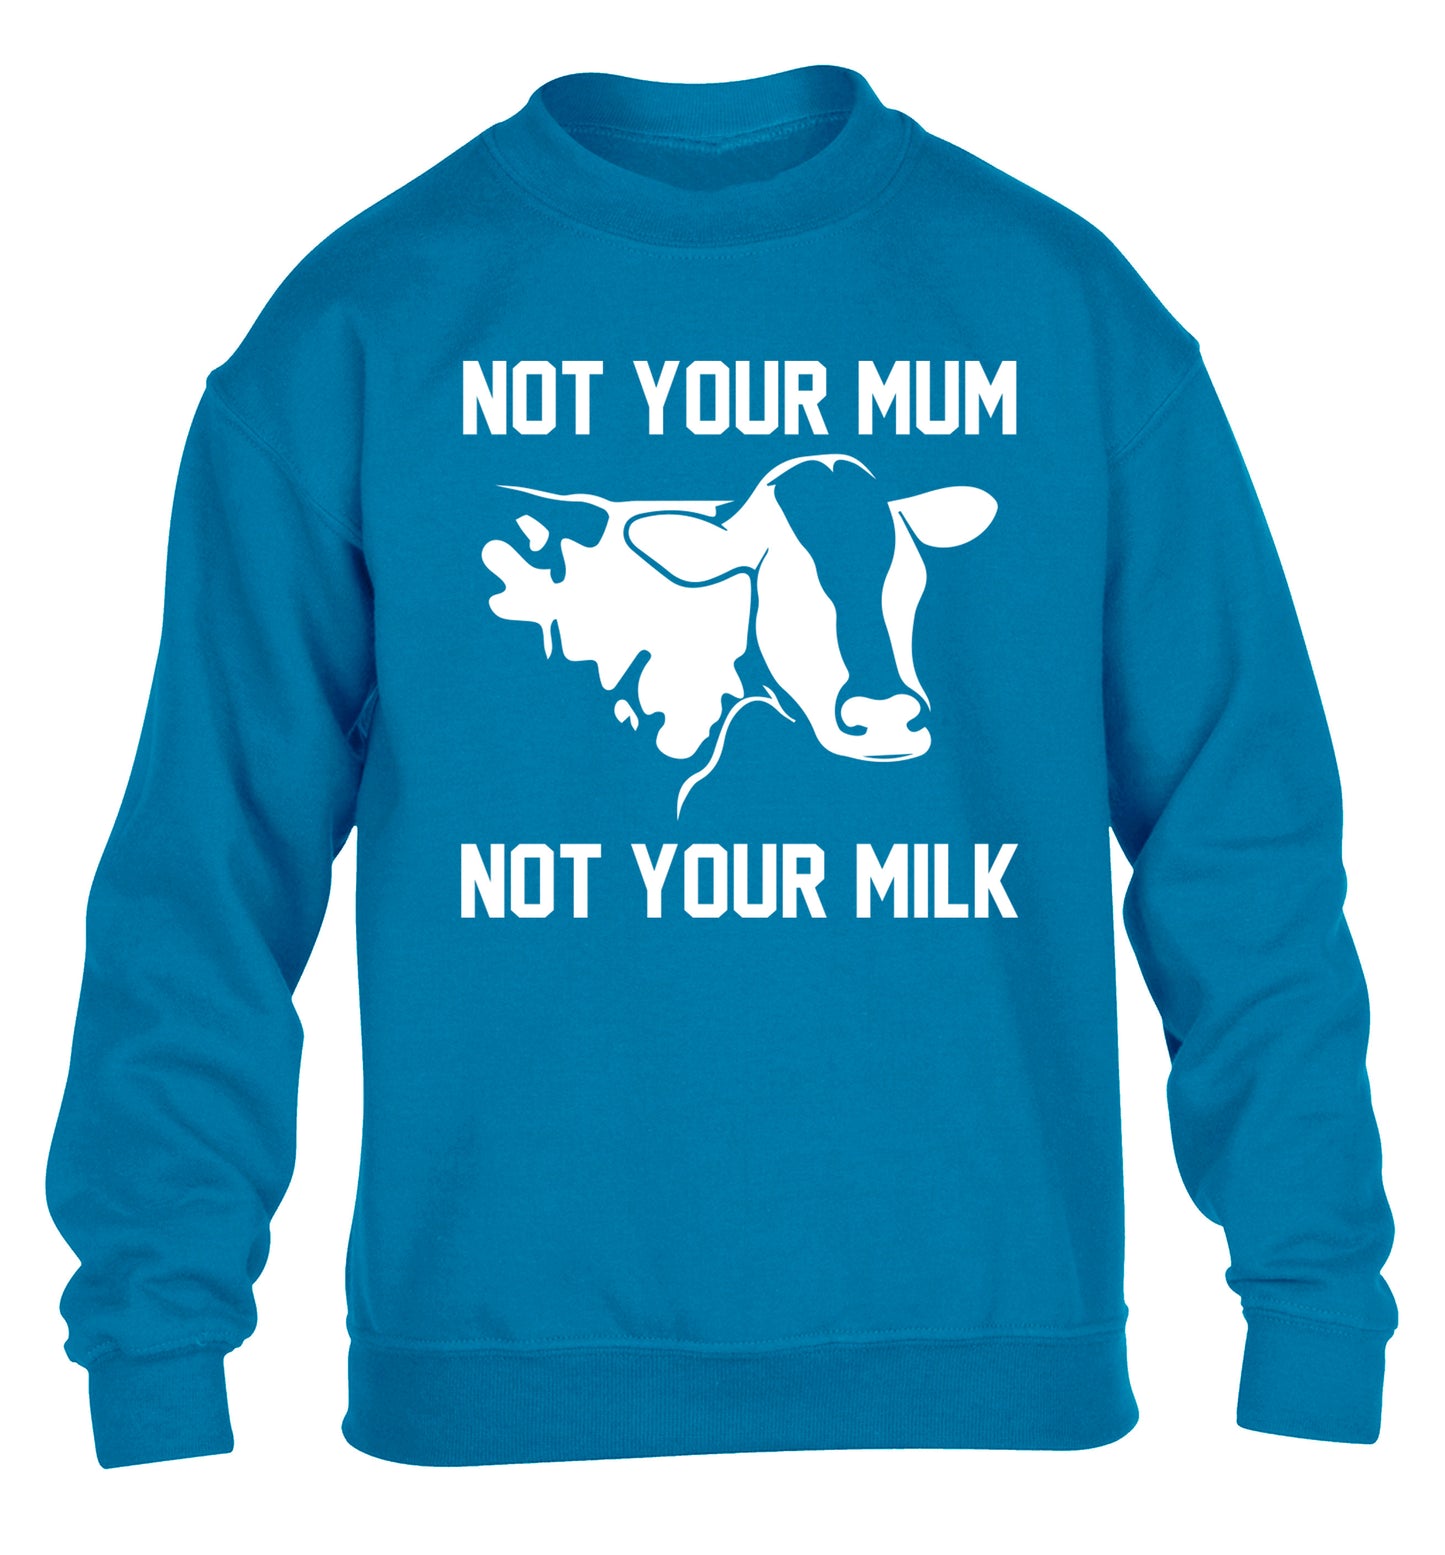 Not your mum not your milk children's blue sweater 12-14 Years